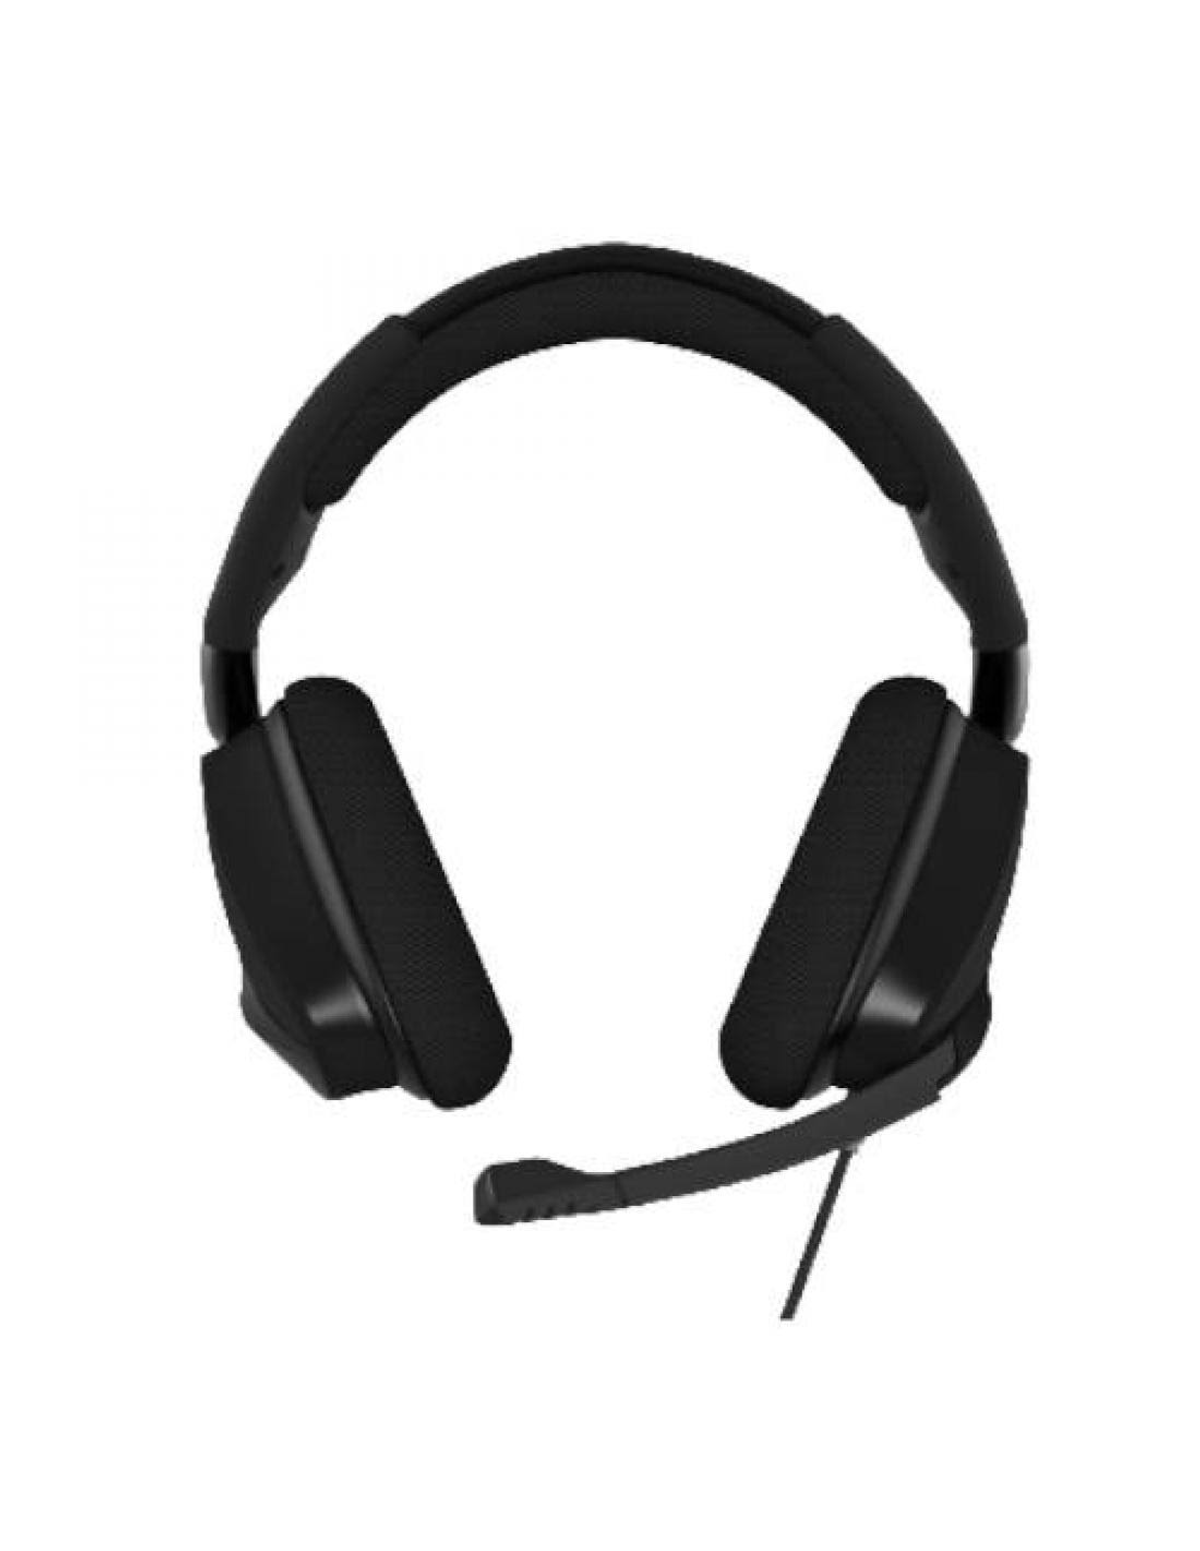 CORSAIR CA-9011205-EU VOID ELITE Carbon Over-ear Headset Gaming CARBON, SURROUND